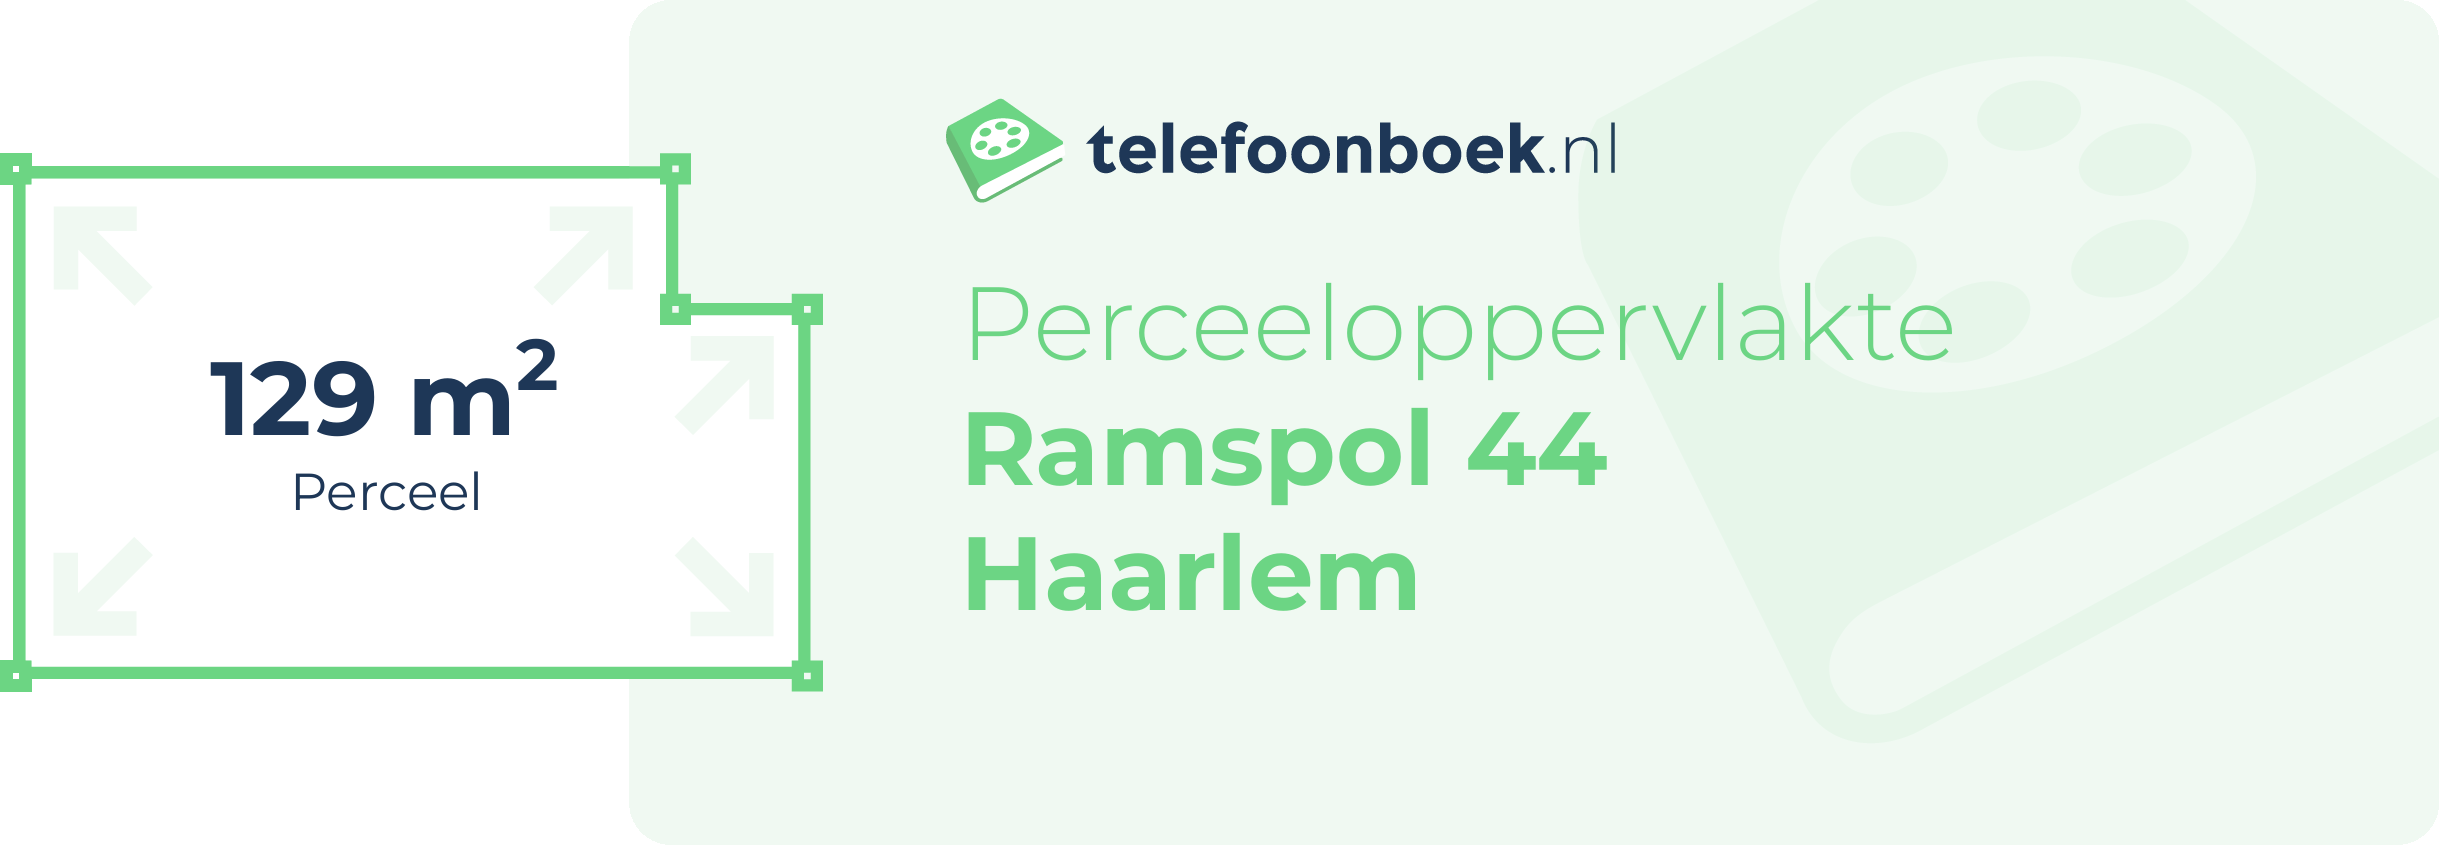 Perceeloppervlakte Ramspol 44 Haarlem